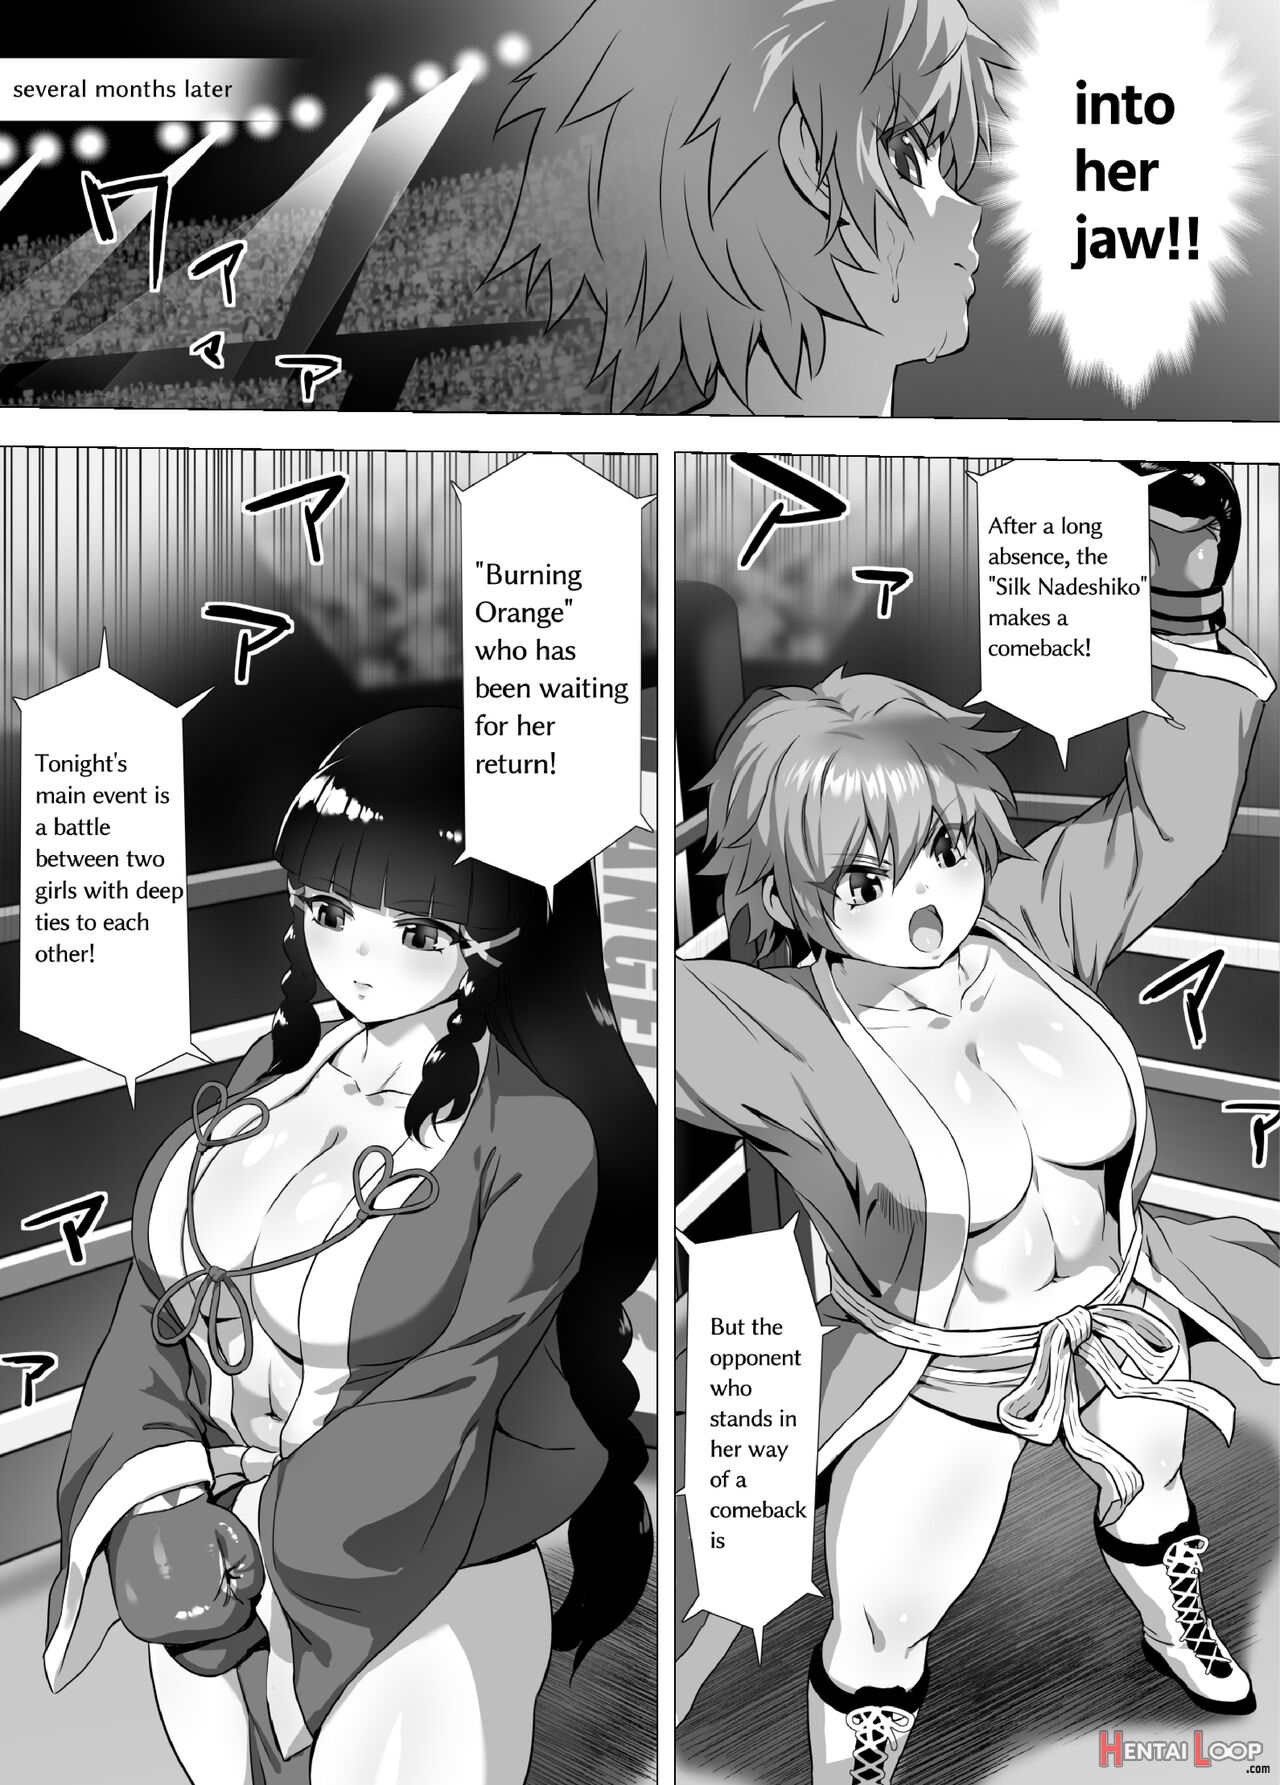 Mahiro Standup! Manga Ver. ~an New Foe Appears! Meet The Lovely Yuzuki~ page 16